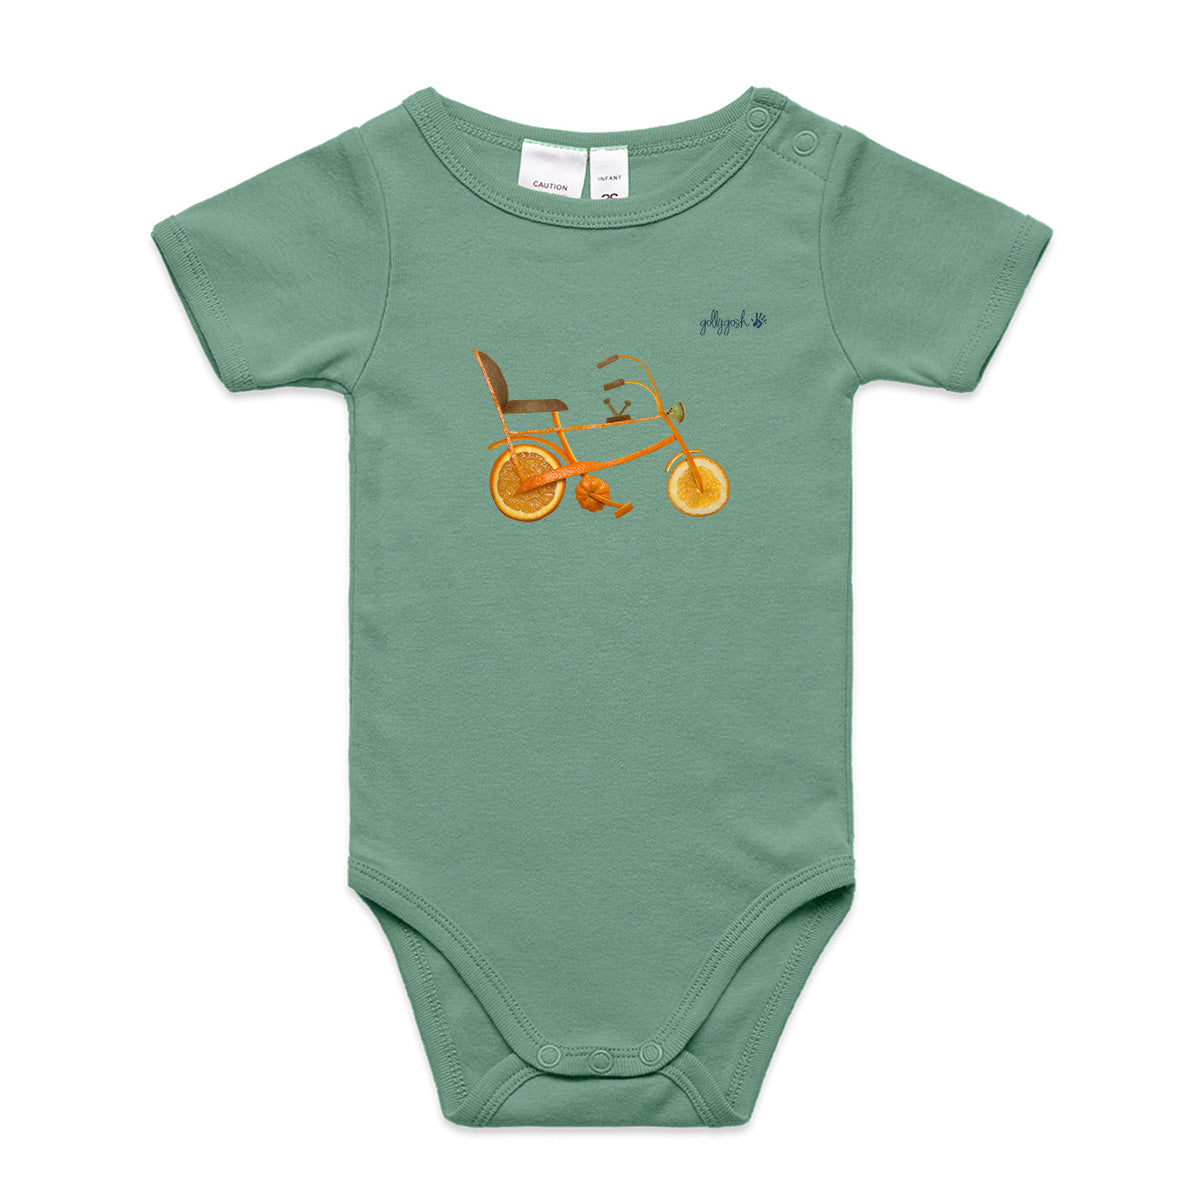 Chopper Bike - Infant Baby Grow